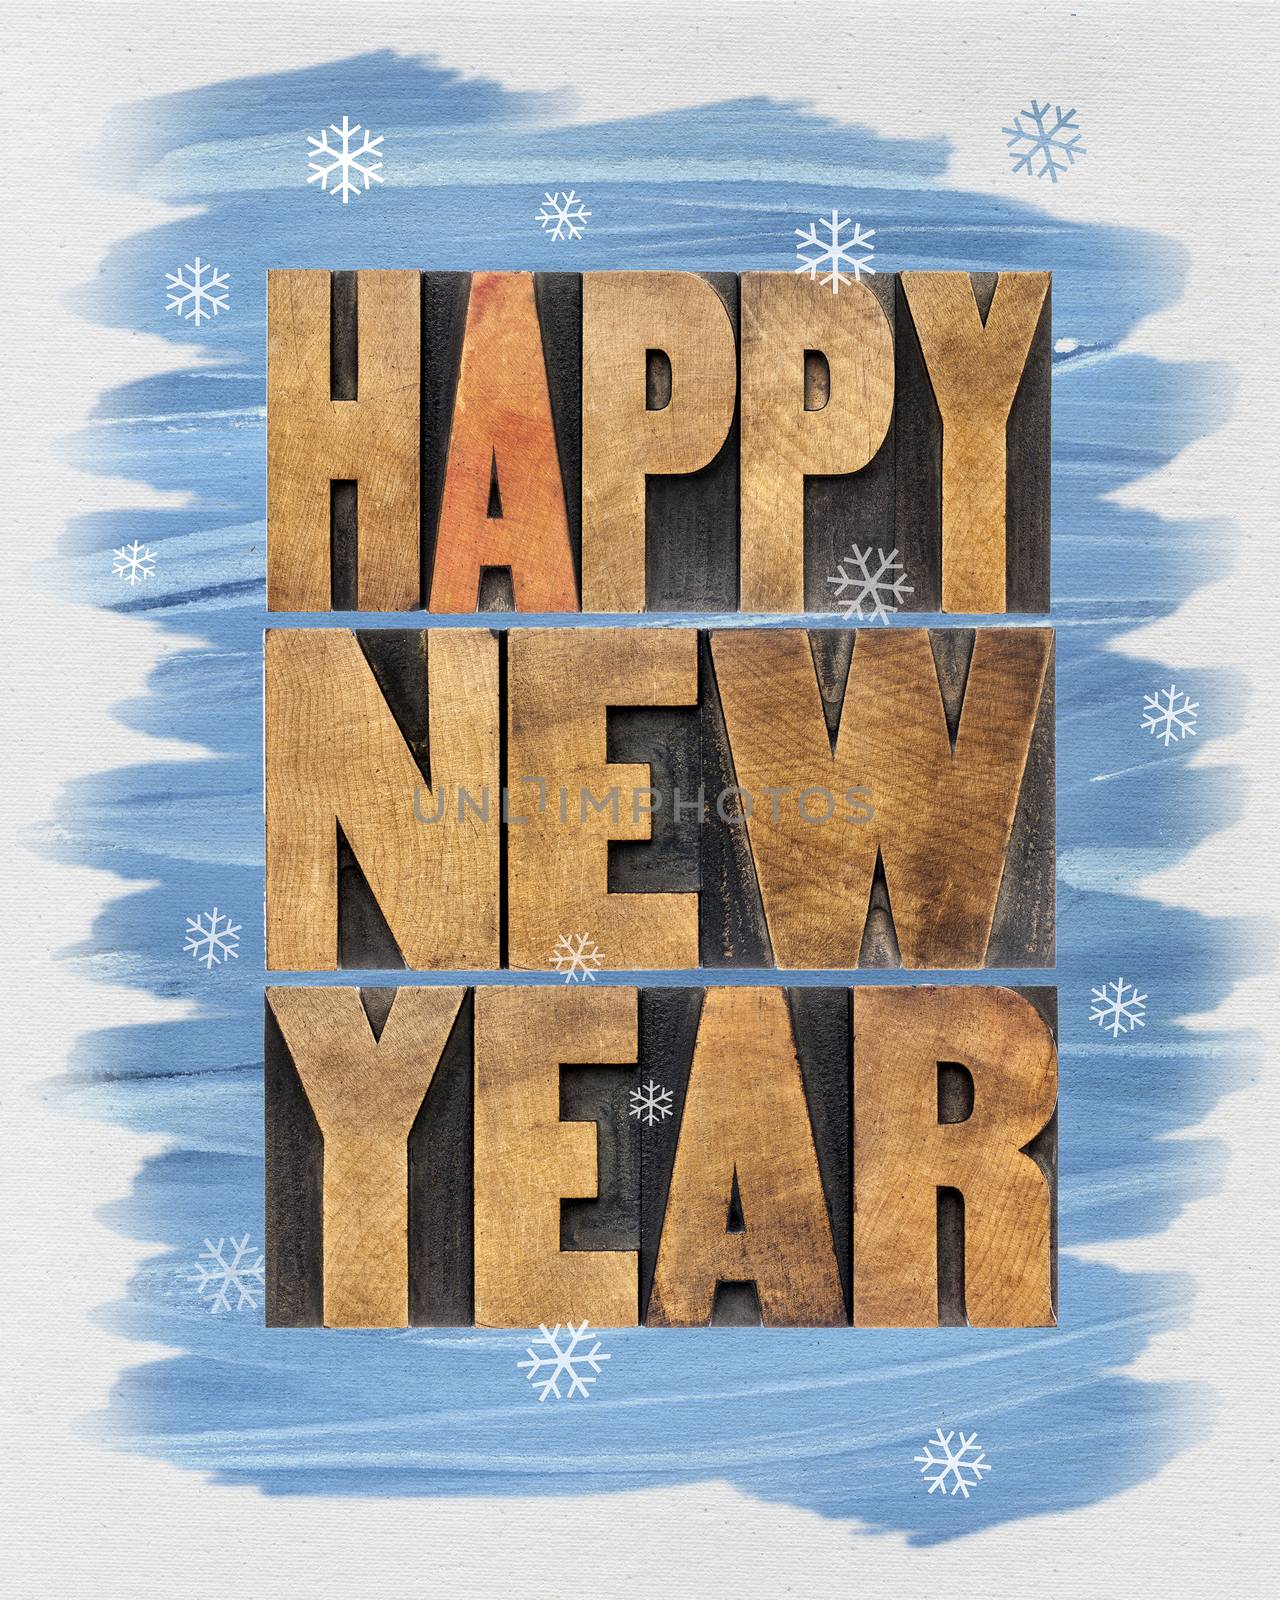 Happy New Year by PixelsAway